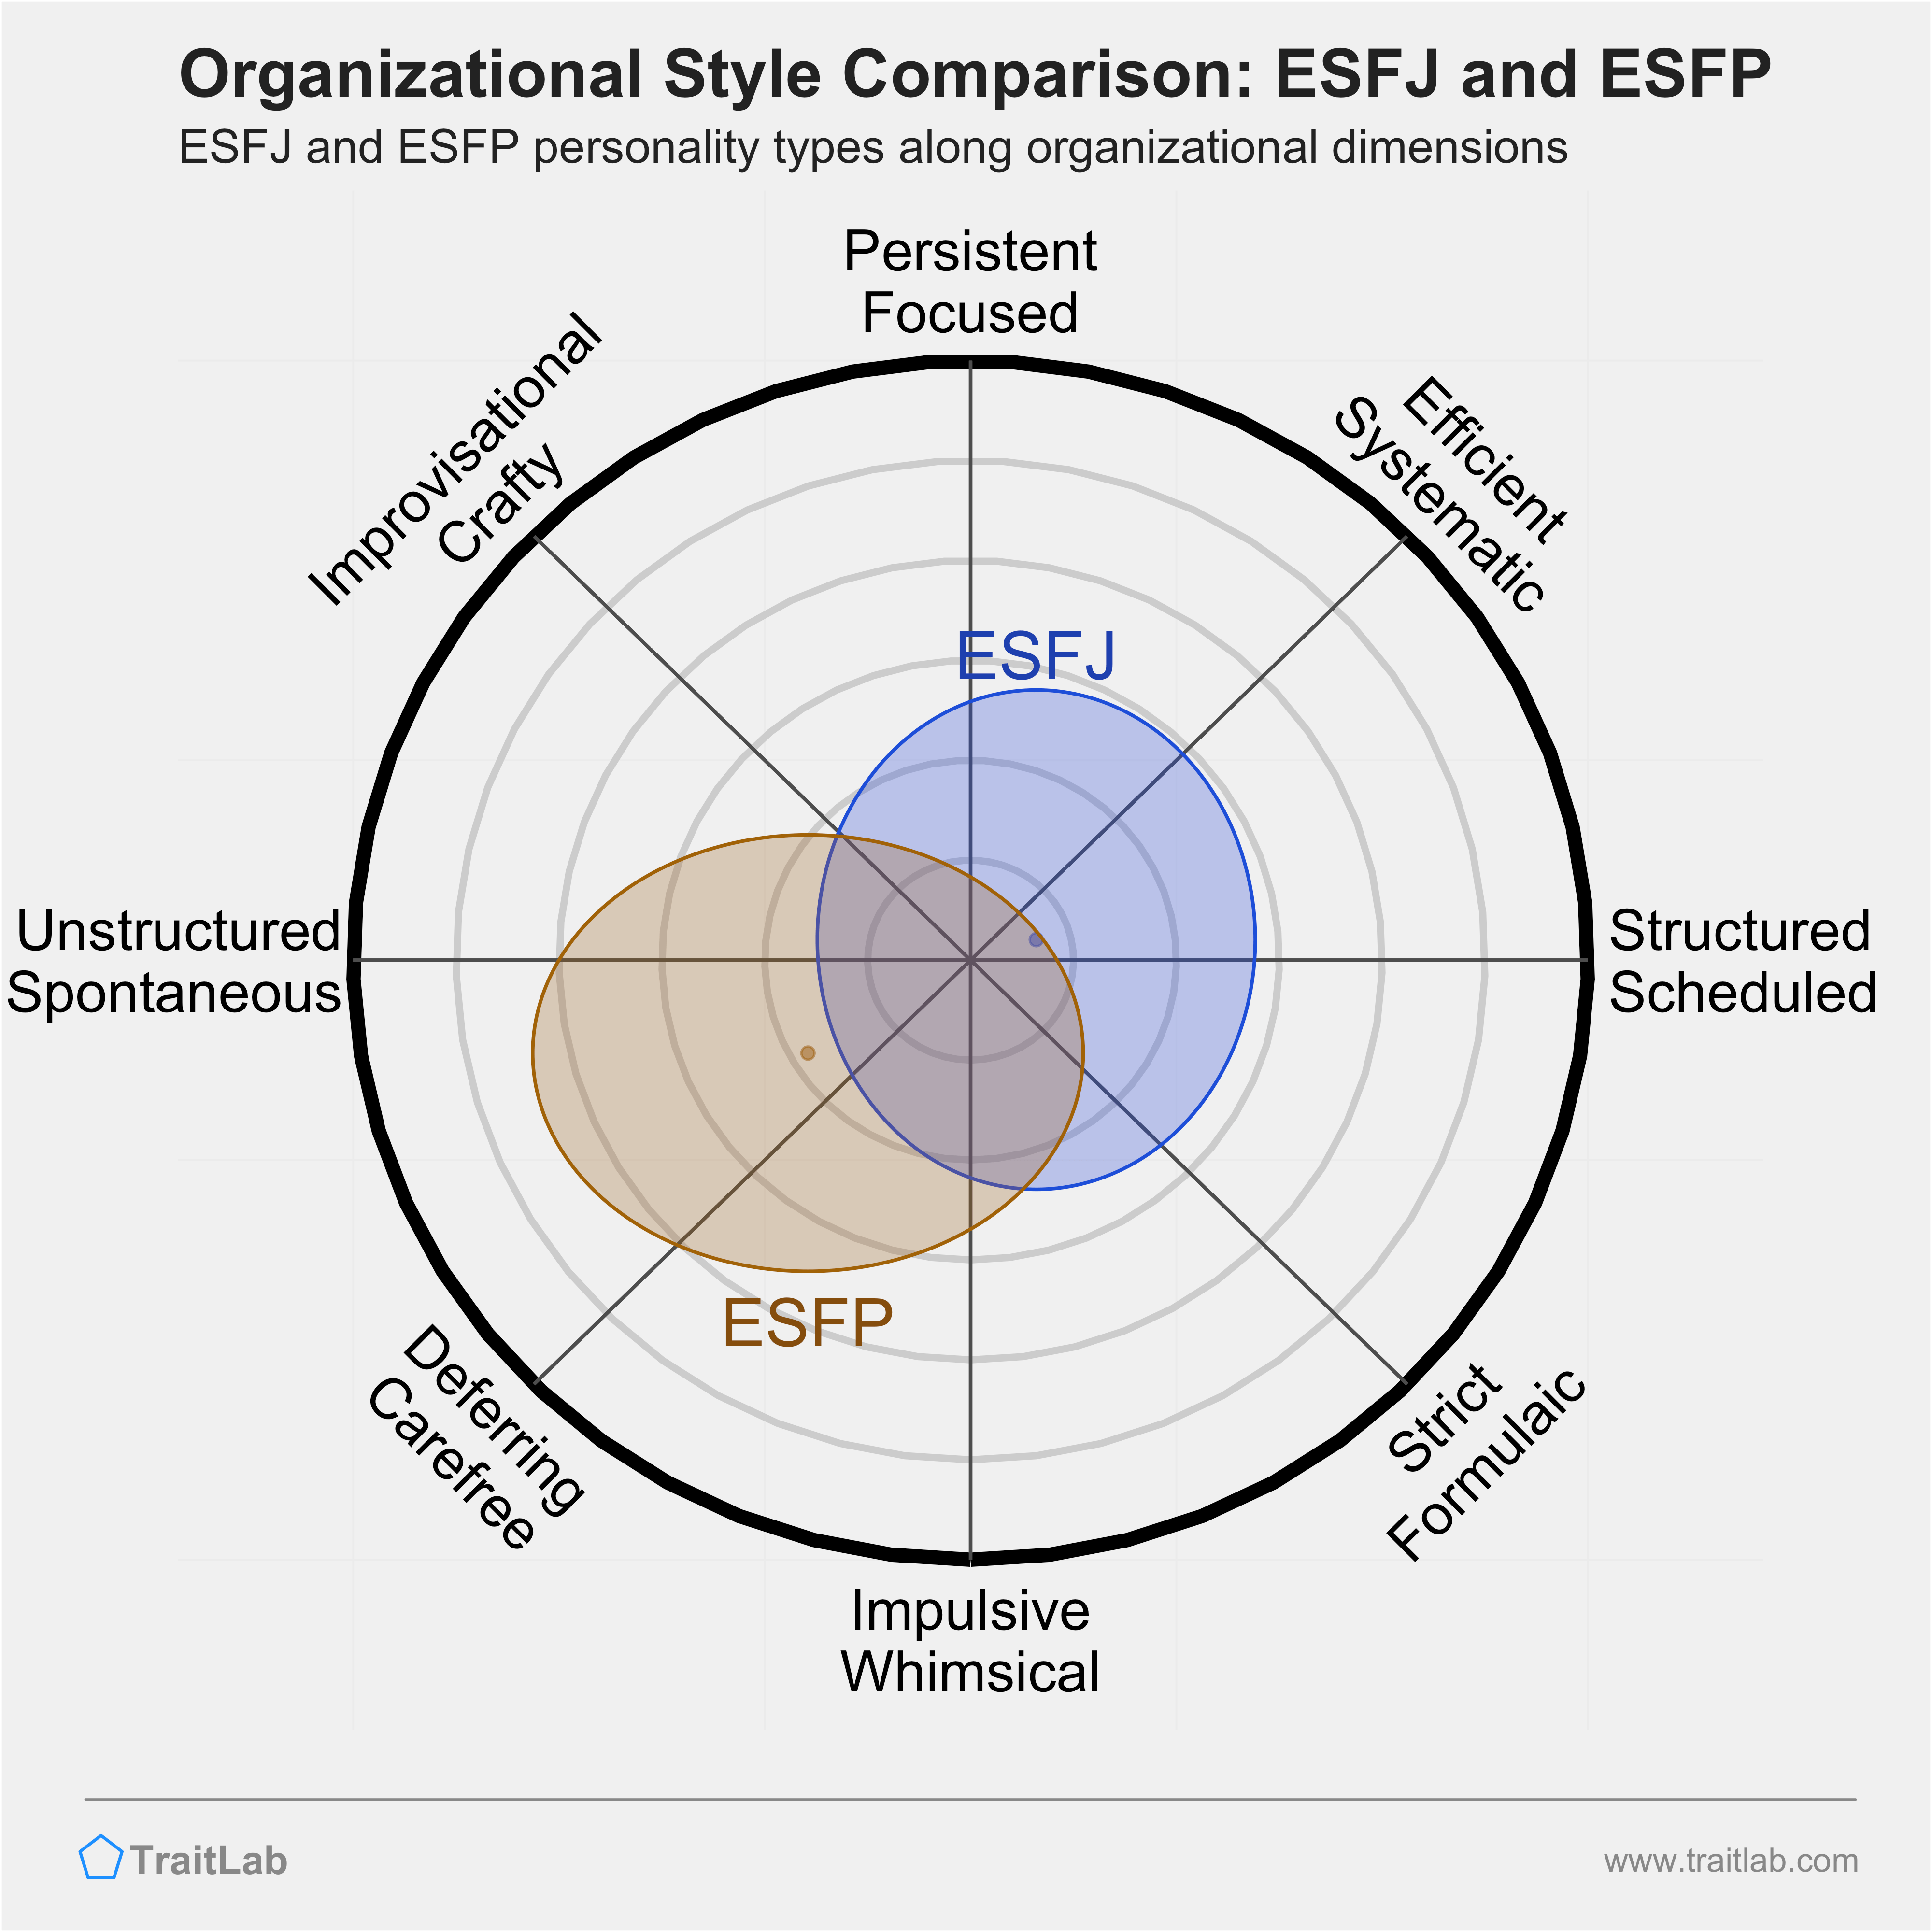 ESFJ and ESFP comparison across organizational dimensions